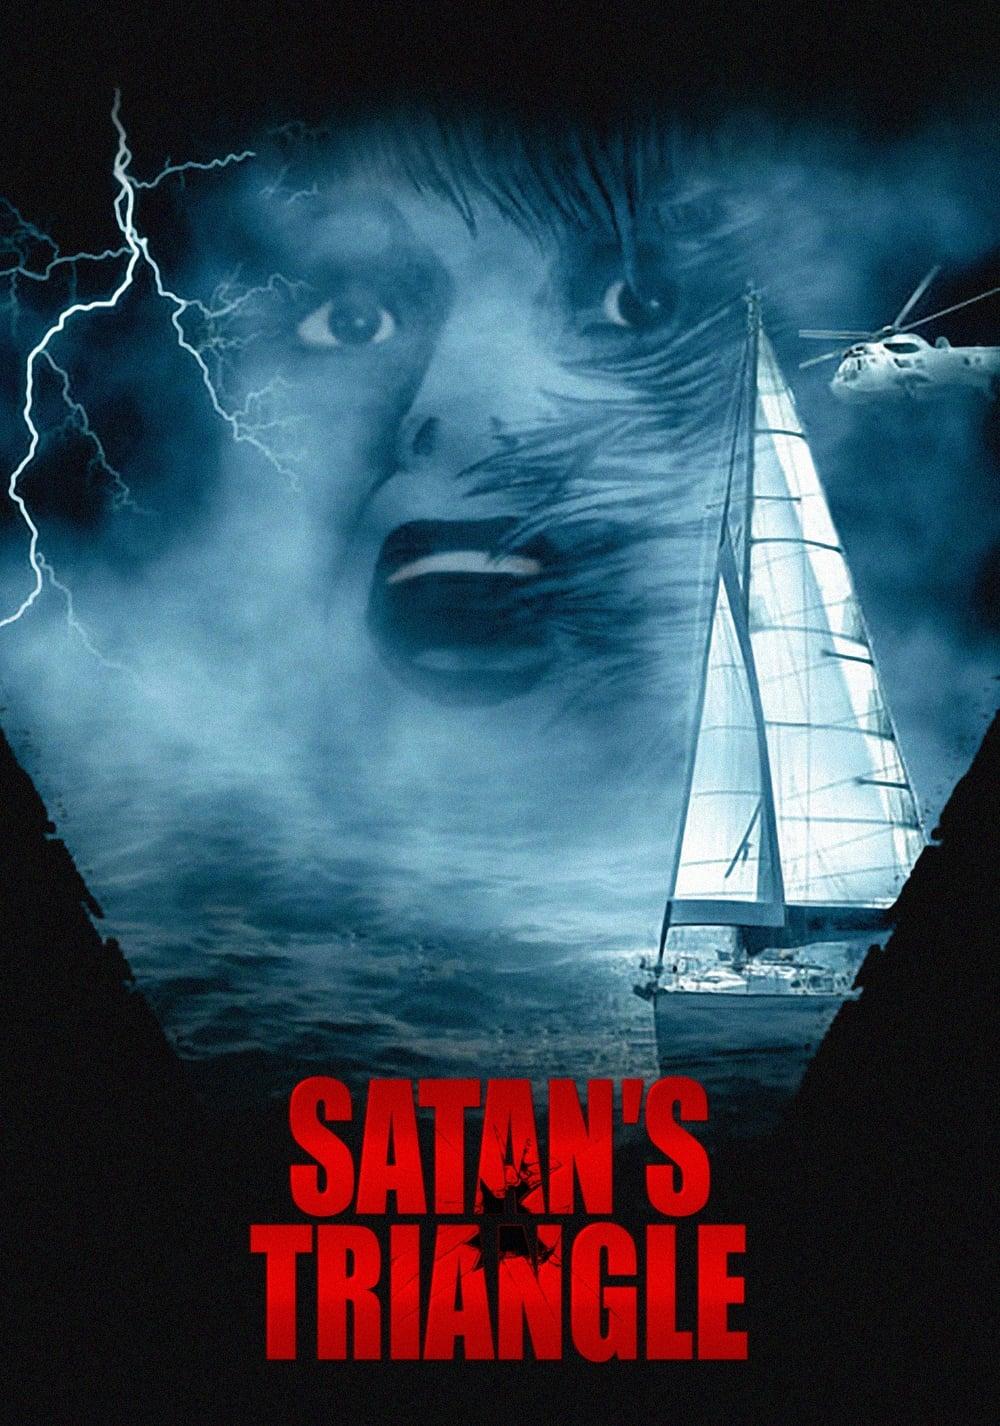 Satan’s Triangle poster